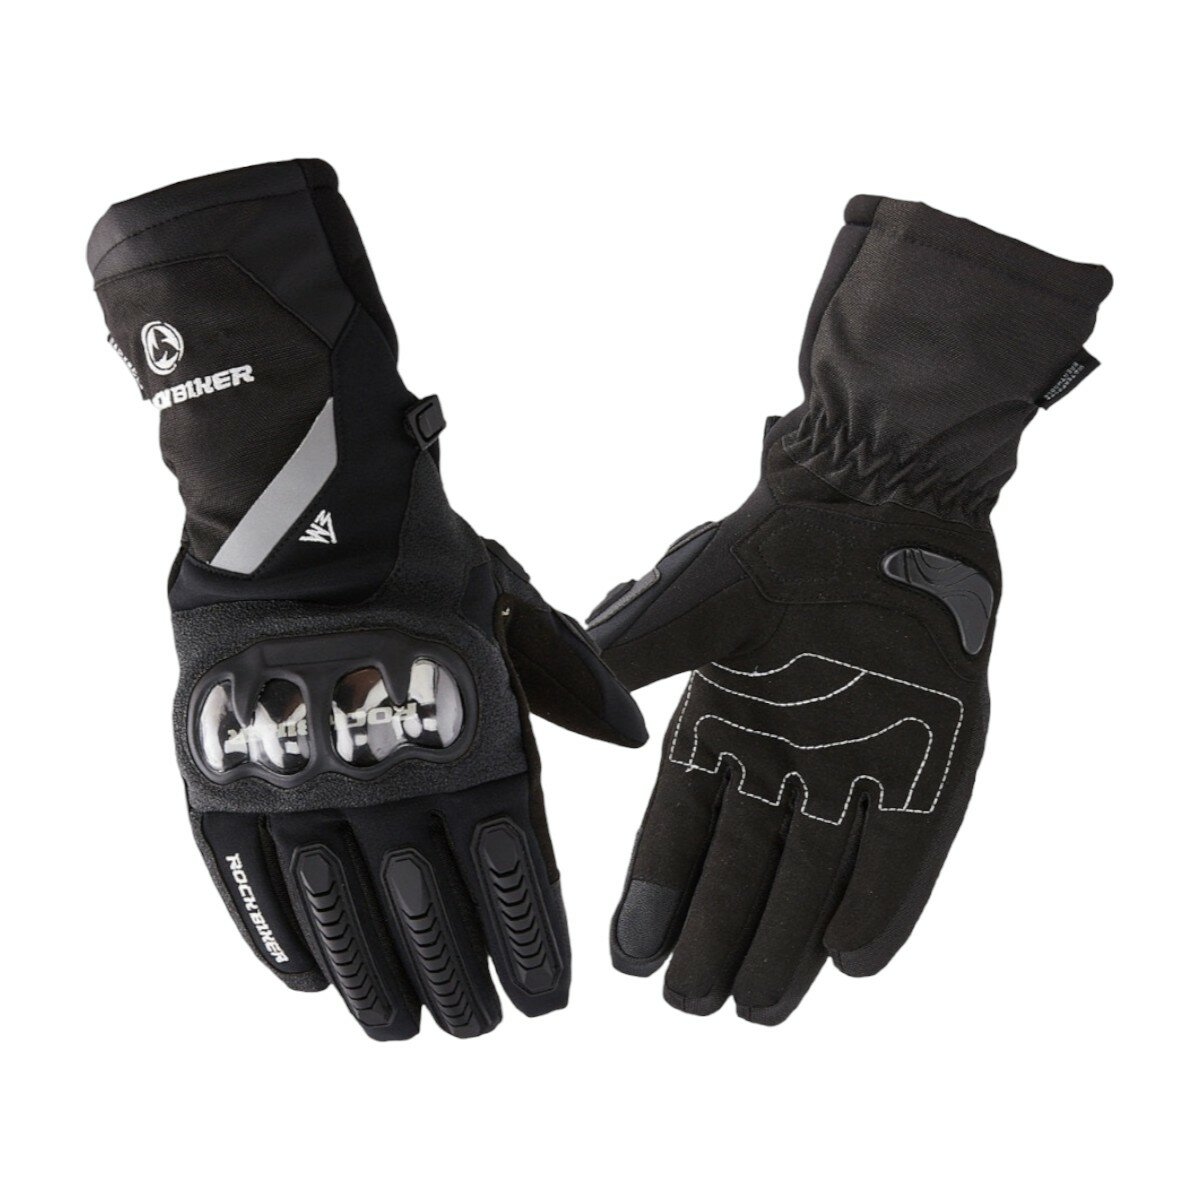 Мотоперчатки перчатки теплые Rock Biker RBG-32 для мотоциклиста на мотоцикл скутер мопед квадроцикл снегоход, черные, XL